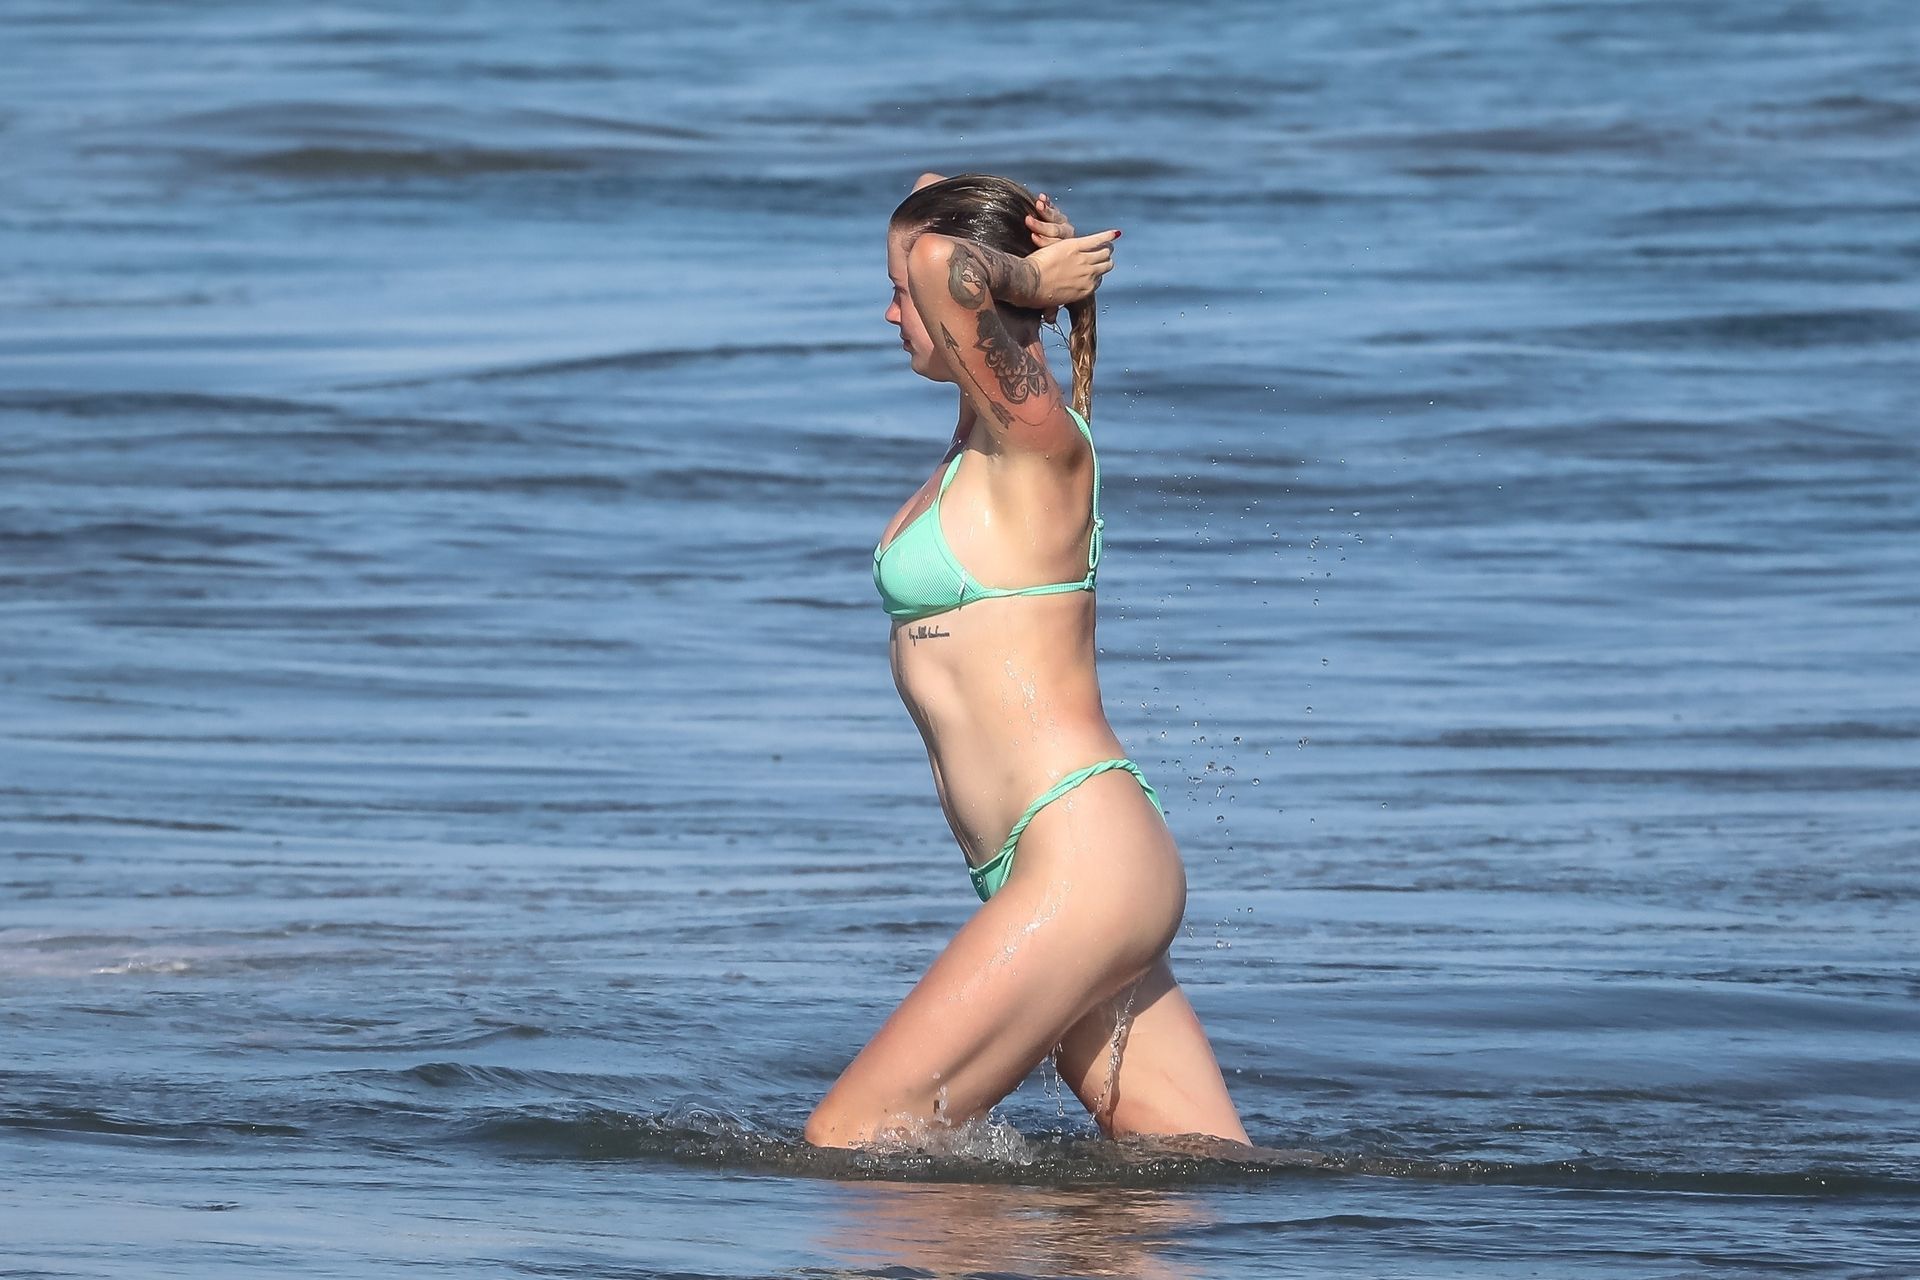 Ireland Baldwin Goes For a Dip Splash While Enjoying a Beach Day (4 Photos)